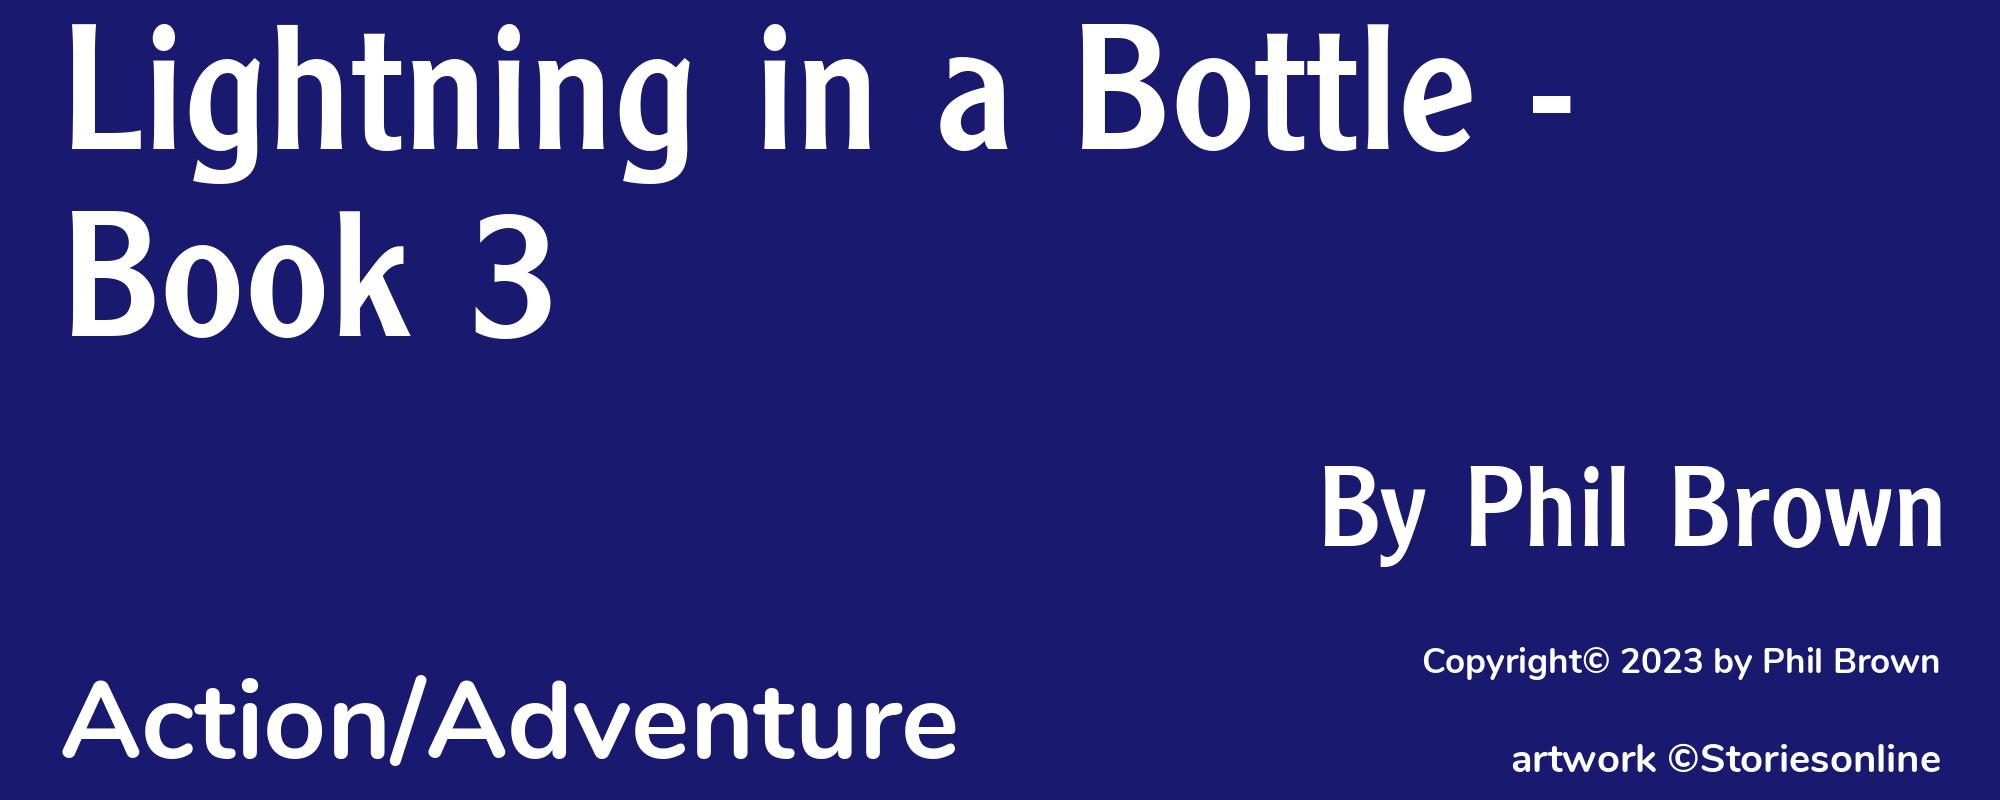 Lightning in a Bottle - Book 3 - Cover